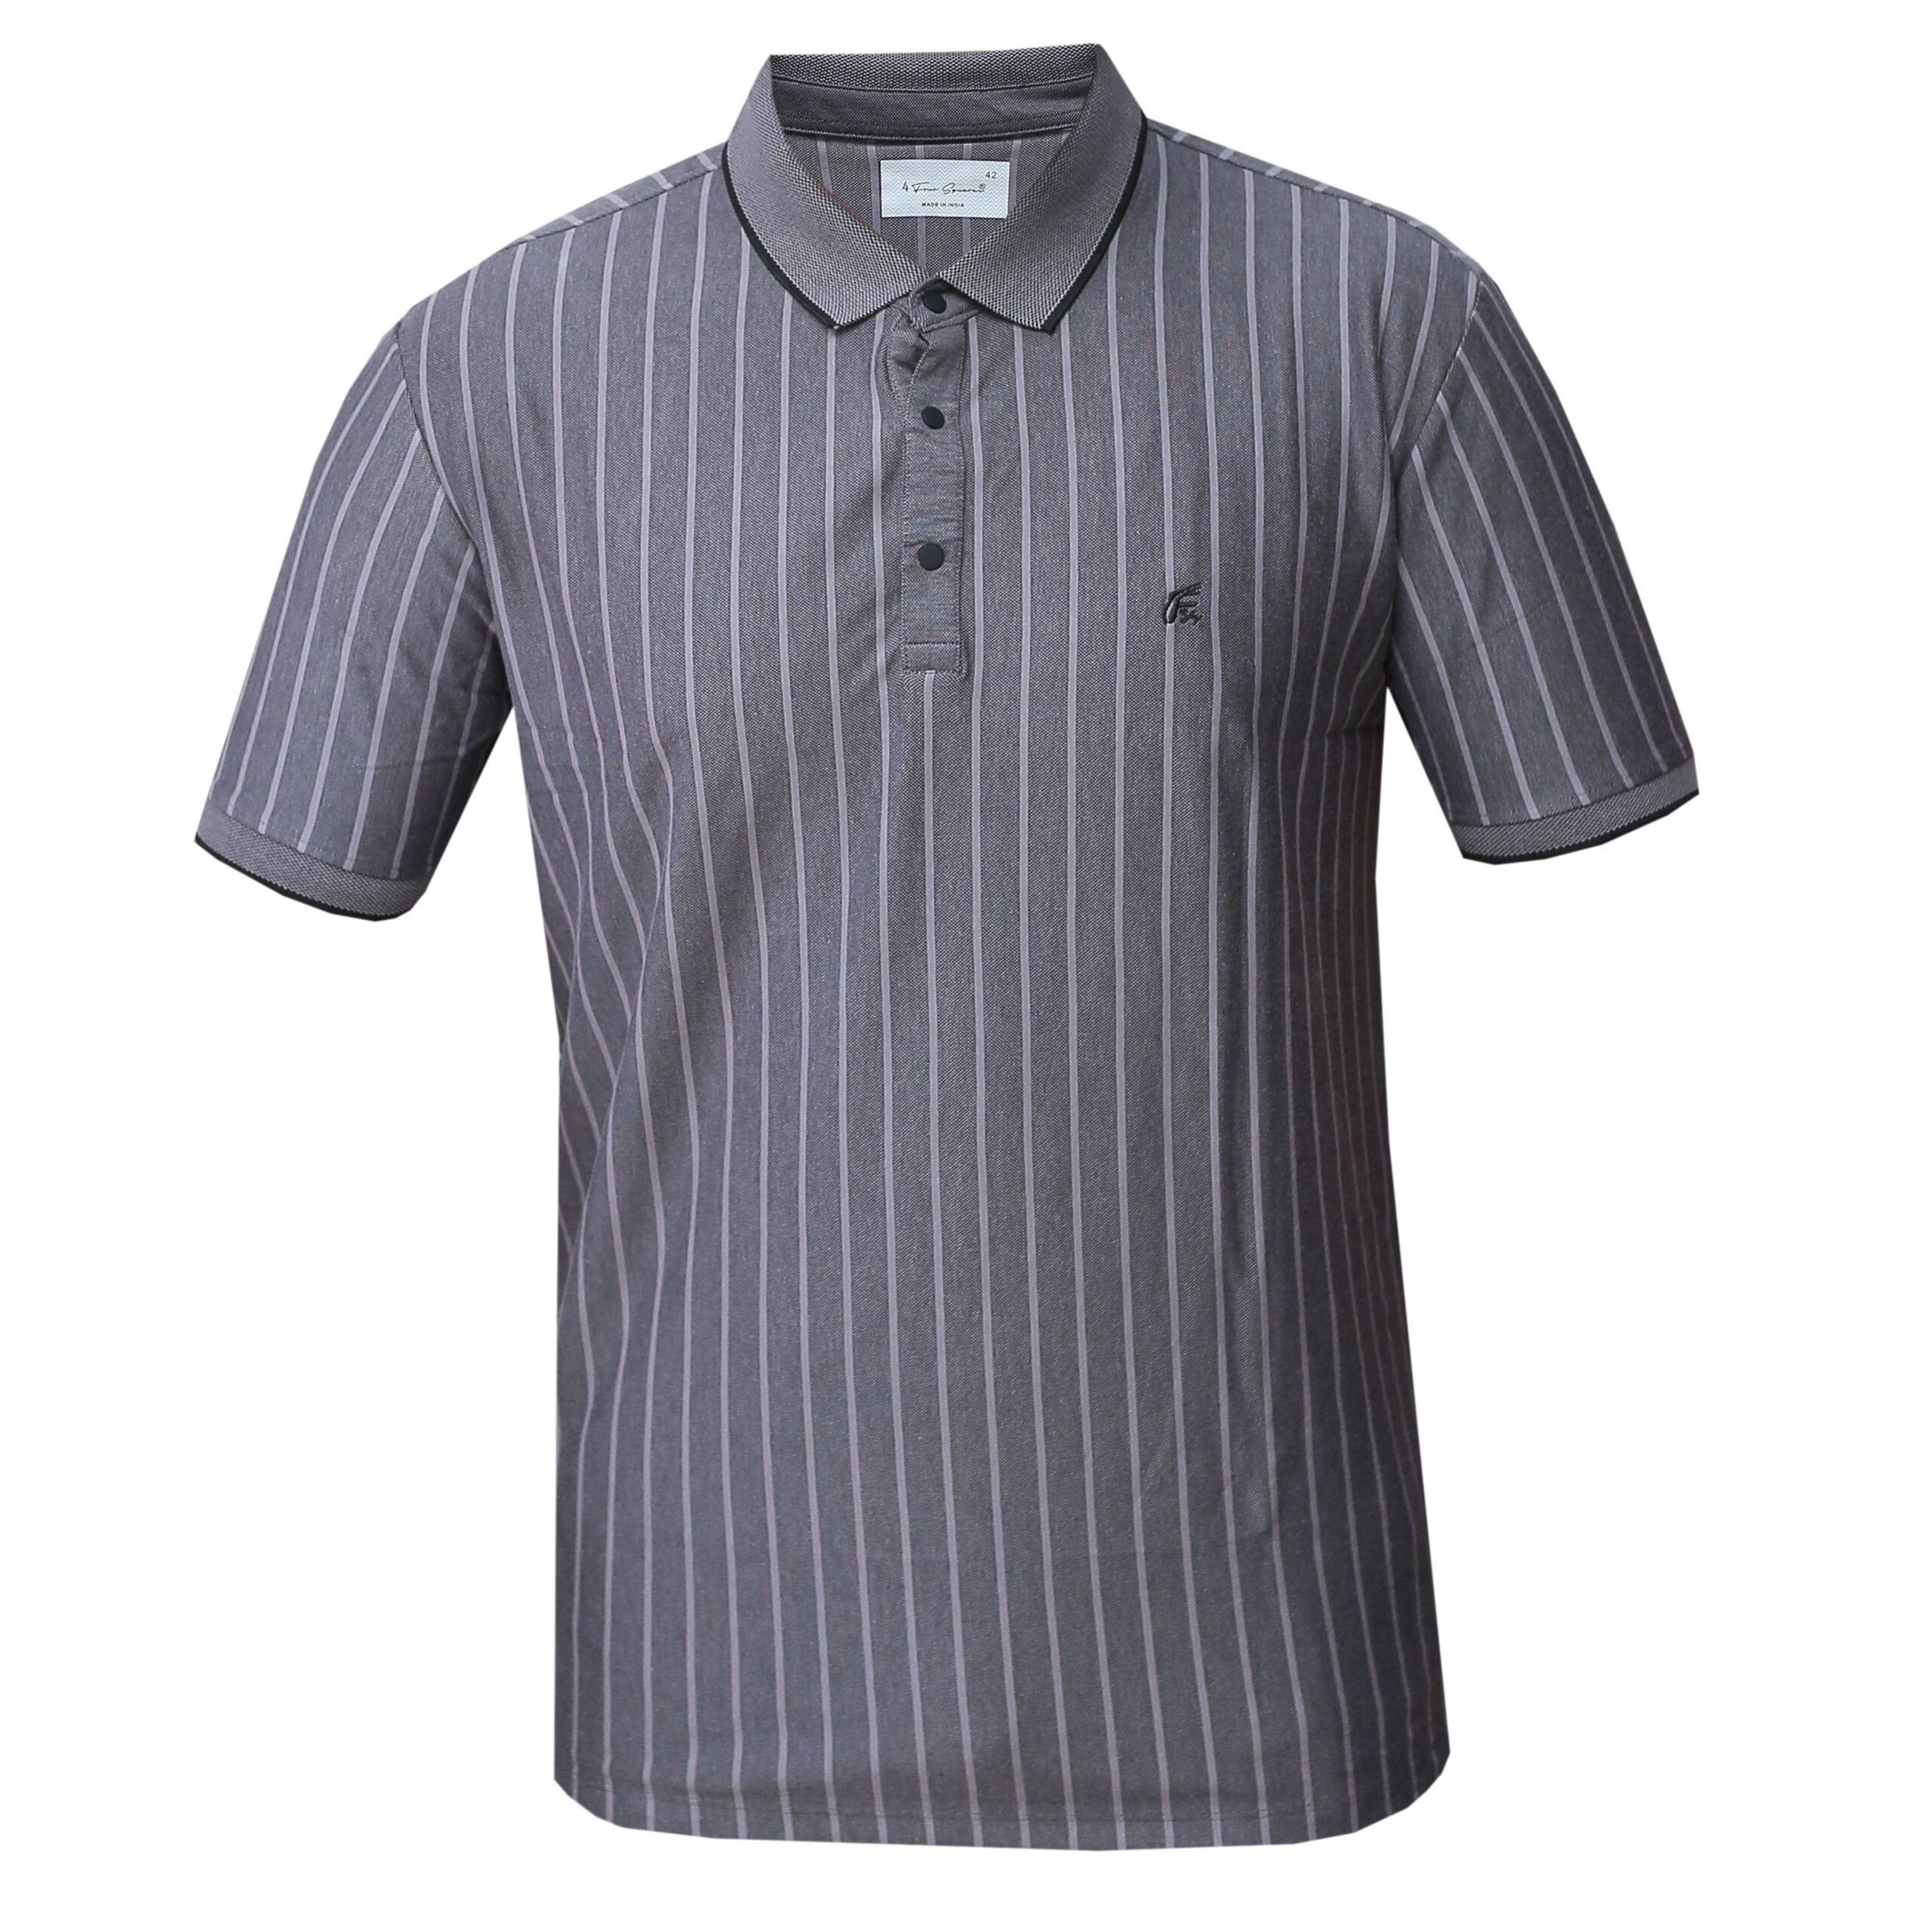 Striped T-Shirt for Men - Smart Casual Wear